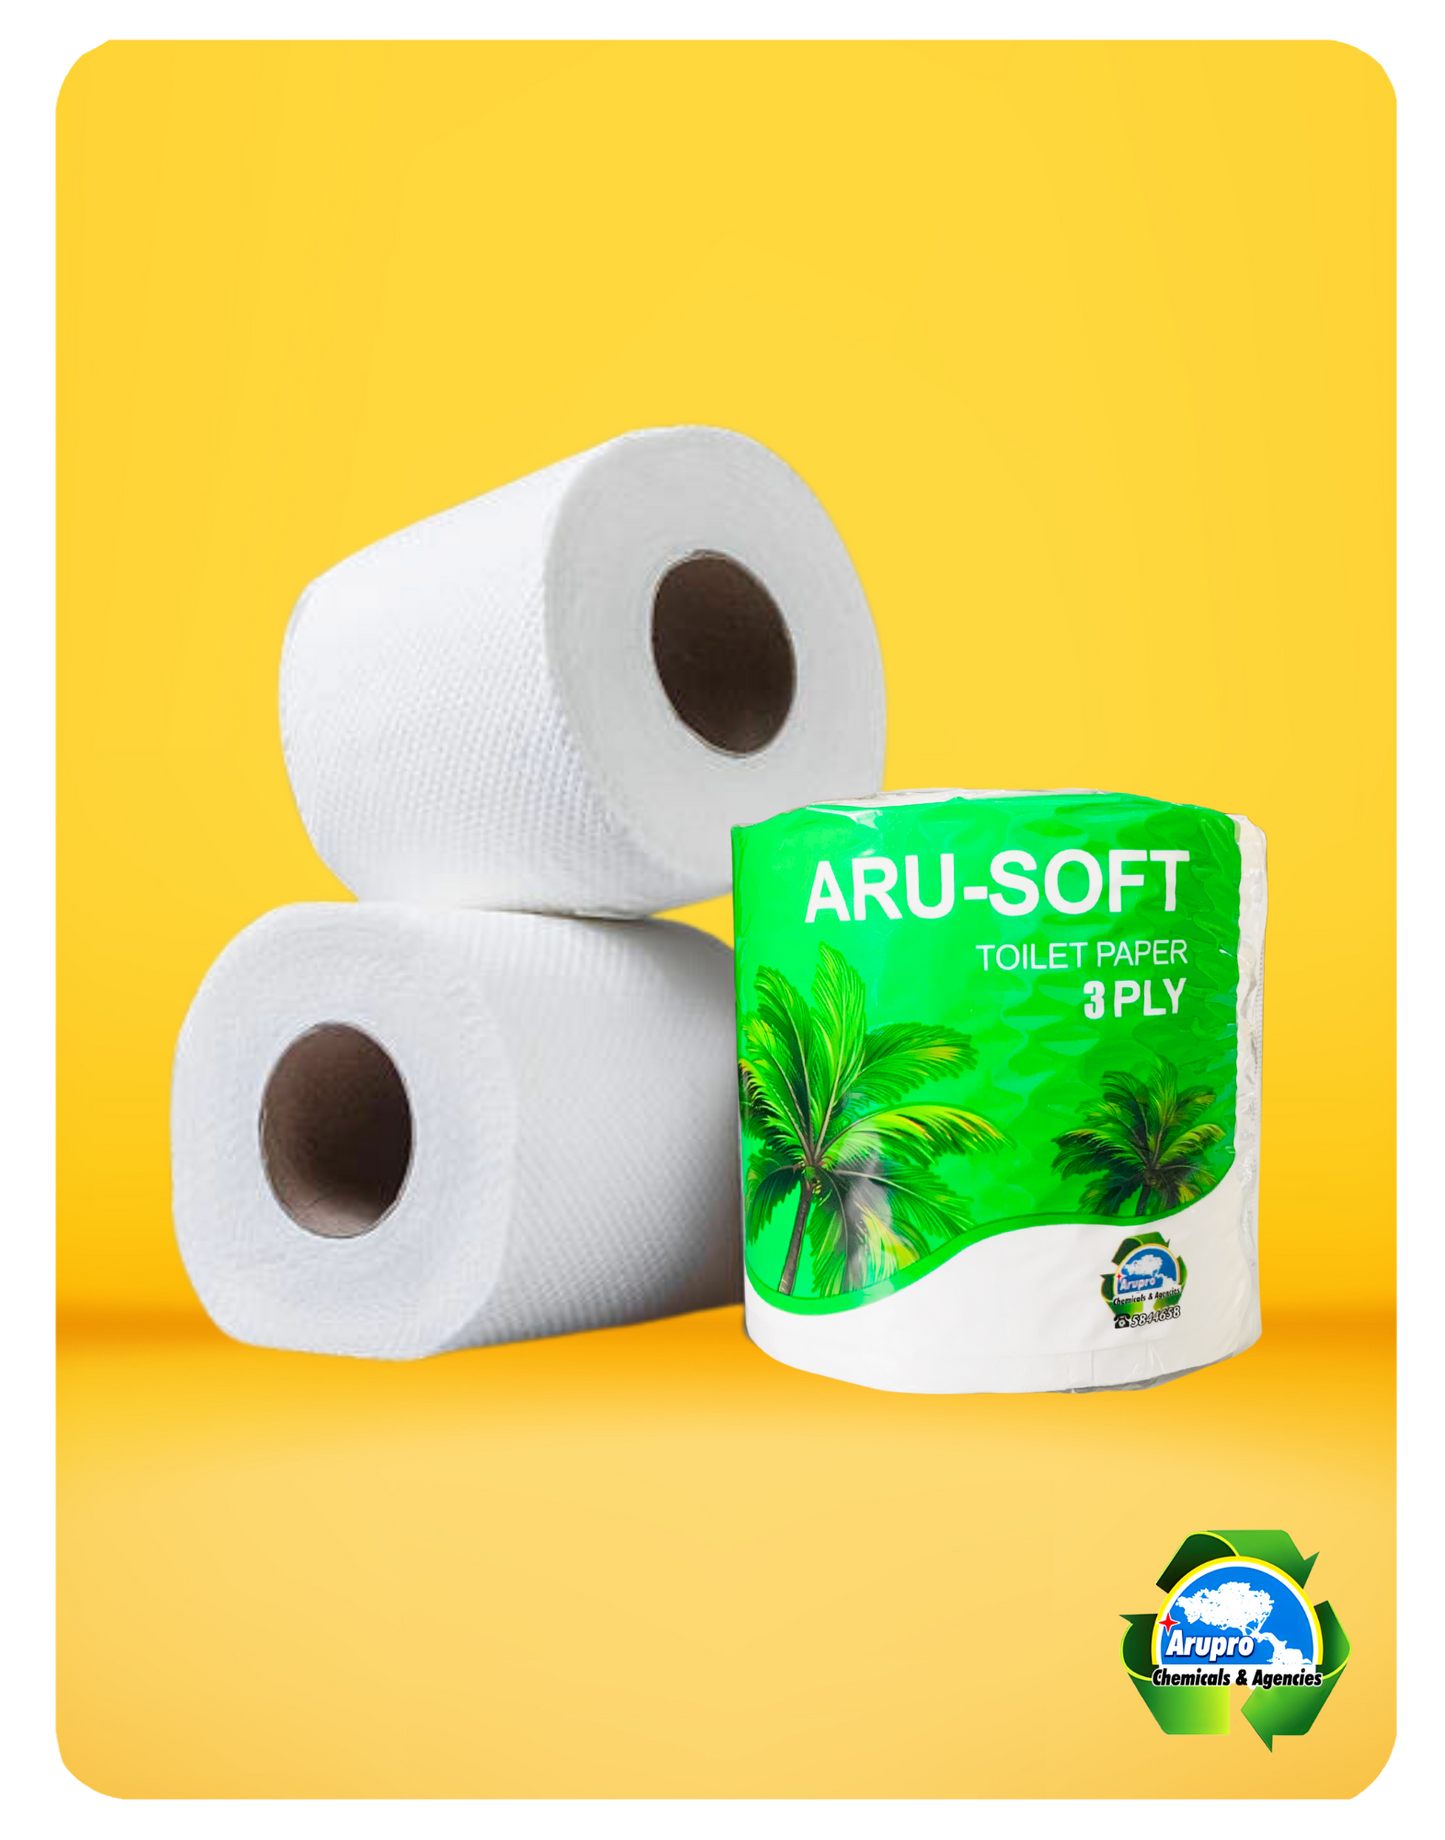 ARU-SOFT TOILET PAPER